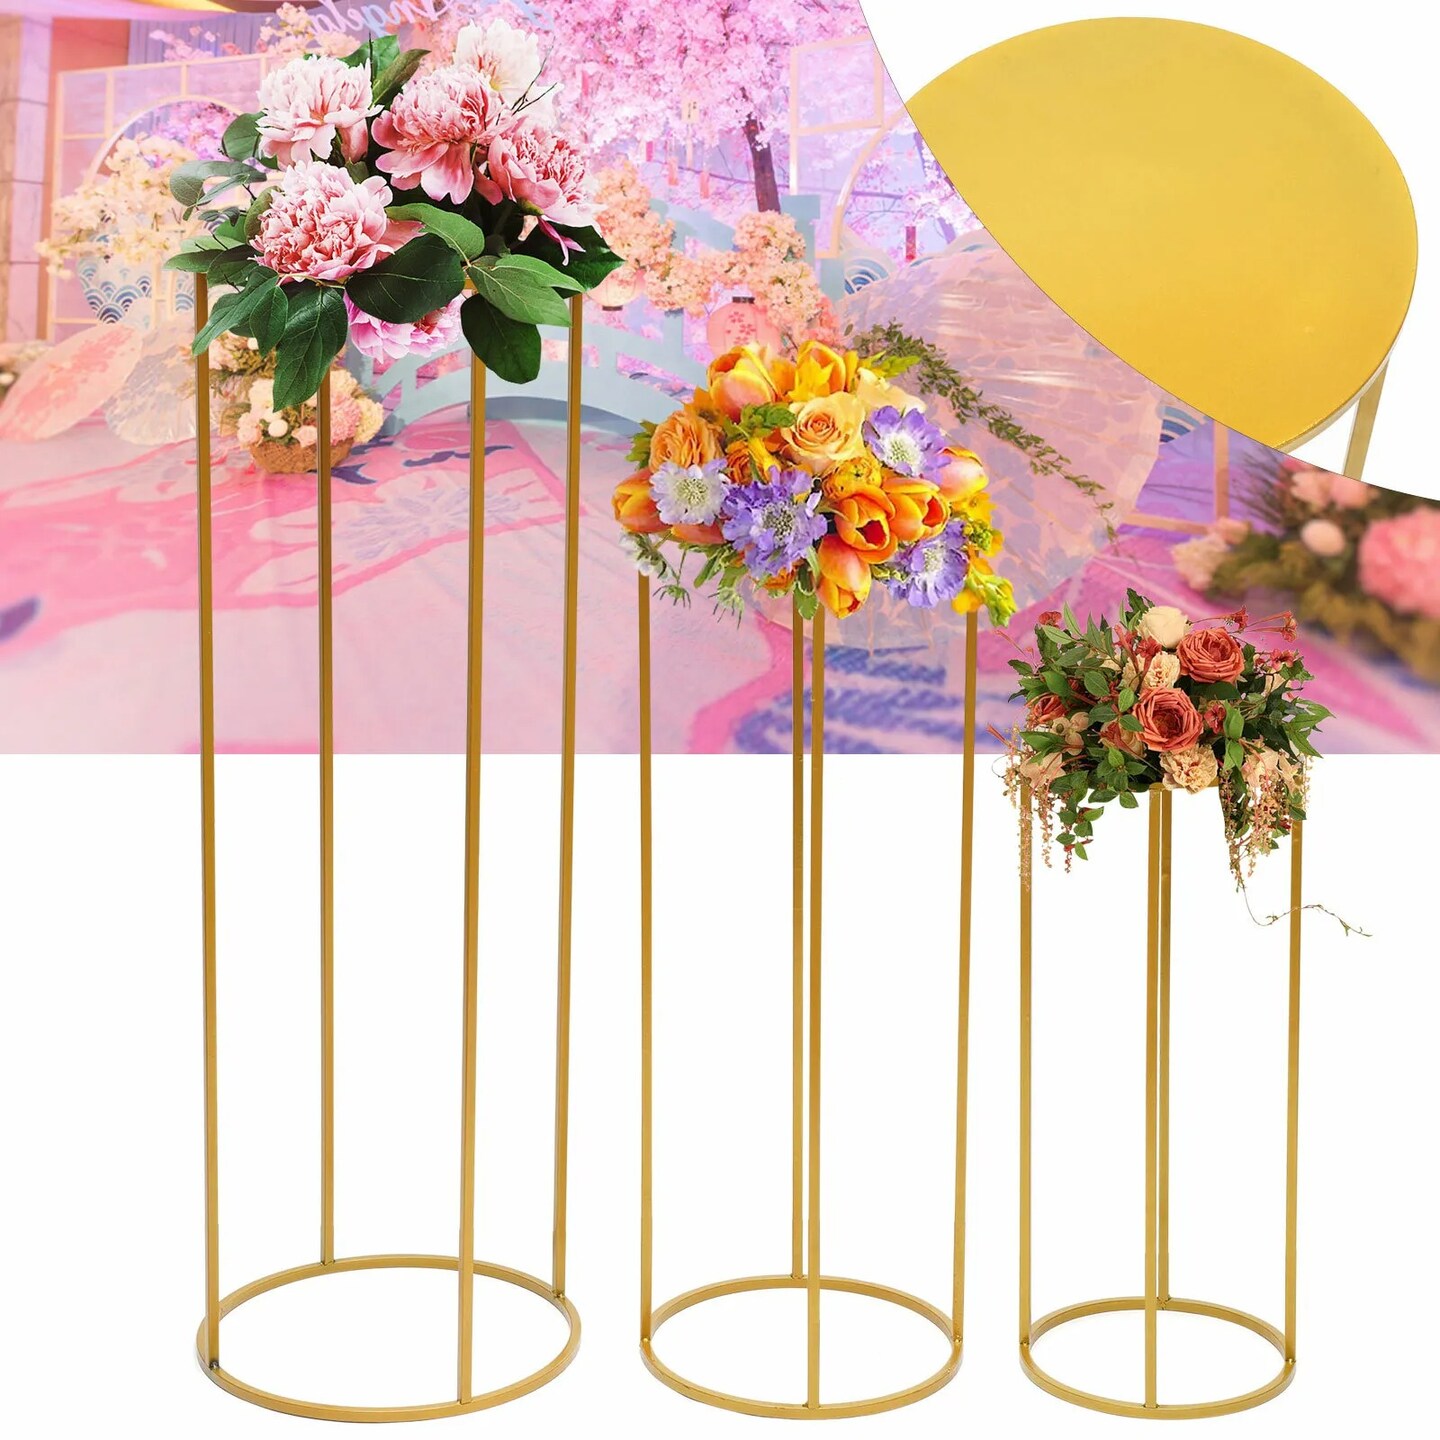 3pcs Metal Flower Stand Gold Round Column Stand Wedding Banquet Hall Party Decor